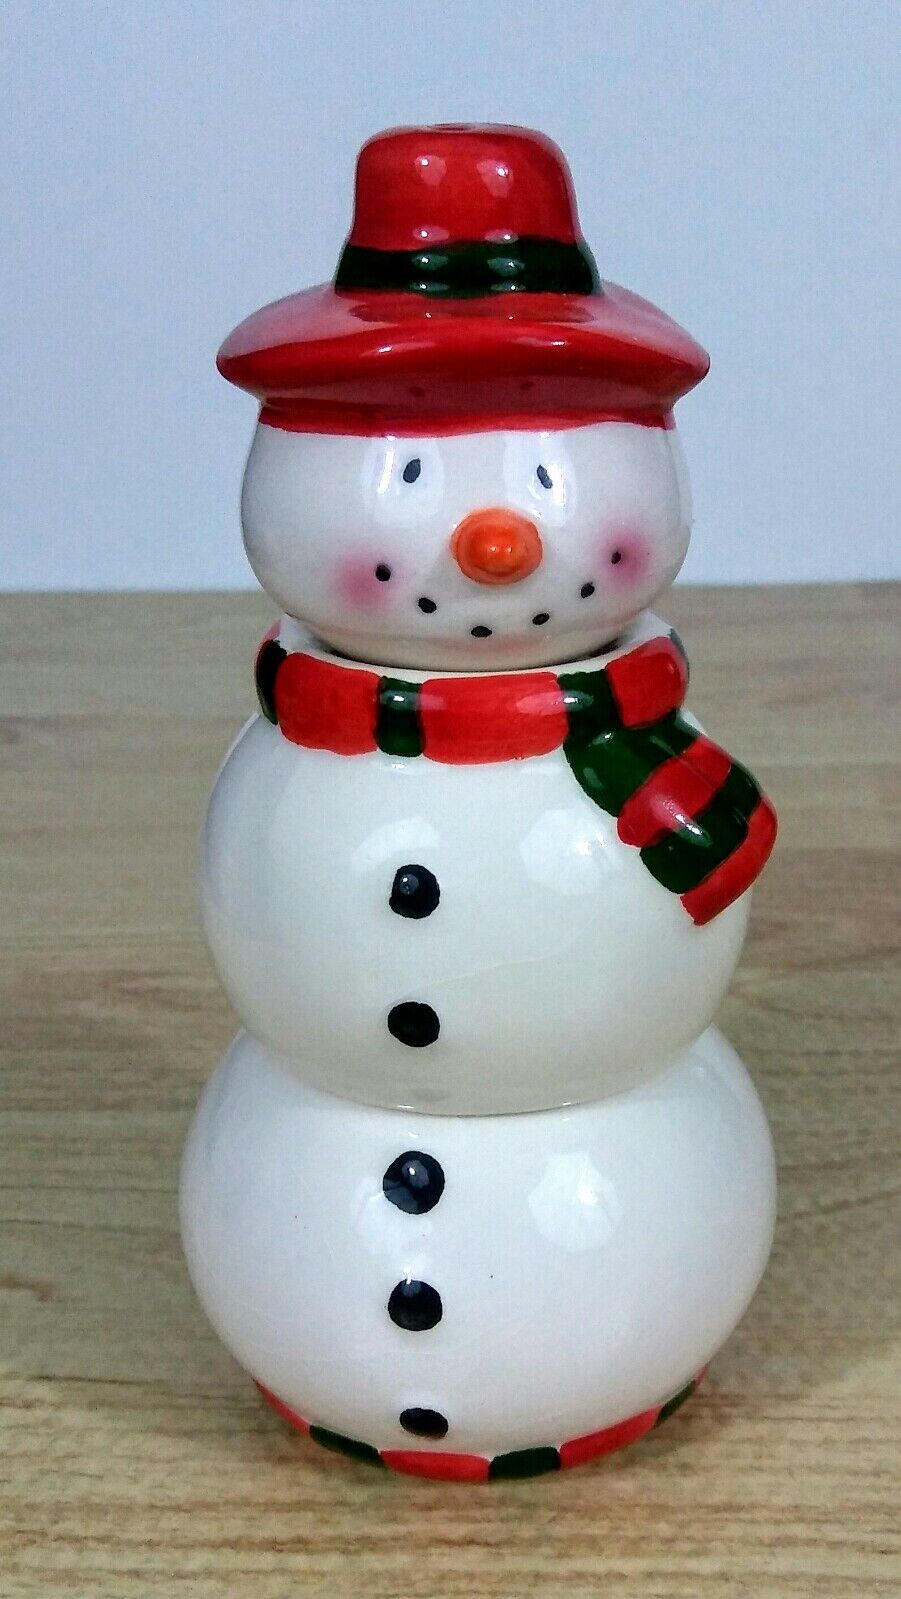 Stacking Snowman Figural 3 Piece Salt & Pepper Shaker Sugar Bowl Set Christmas